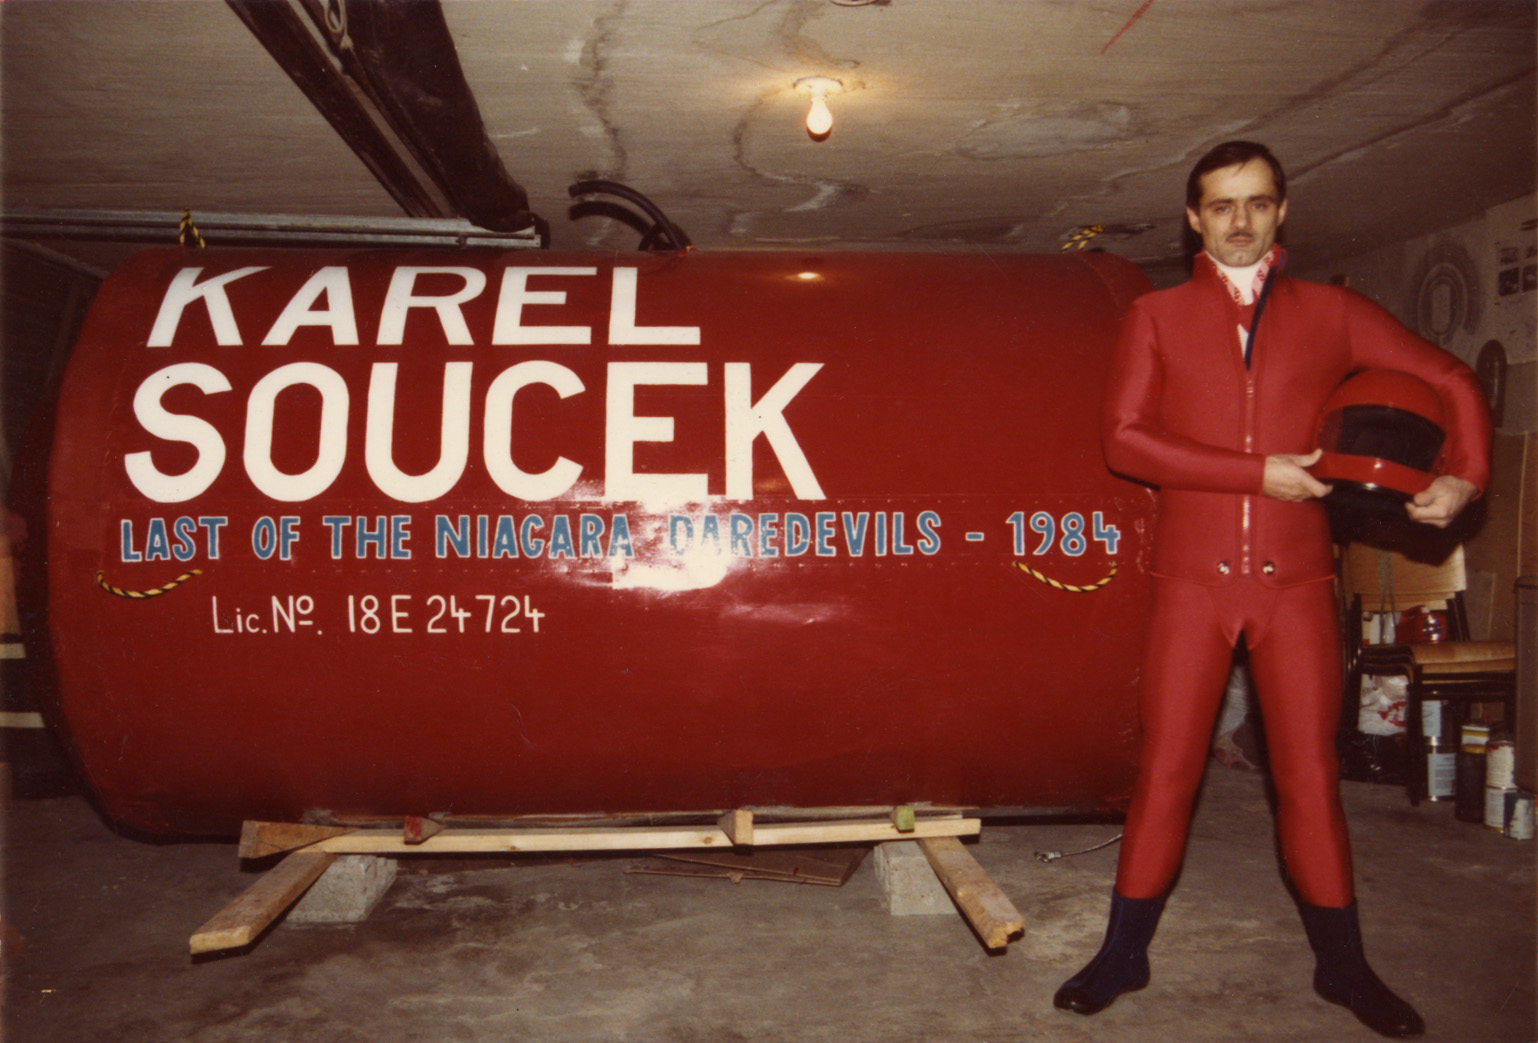 karel soucek barrel - Karel Soucek Last Of The Niagara Daredevils 1984 Lic. No. 18 E 24724